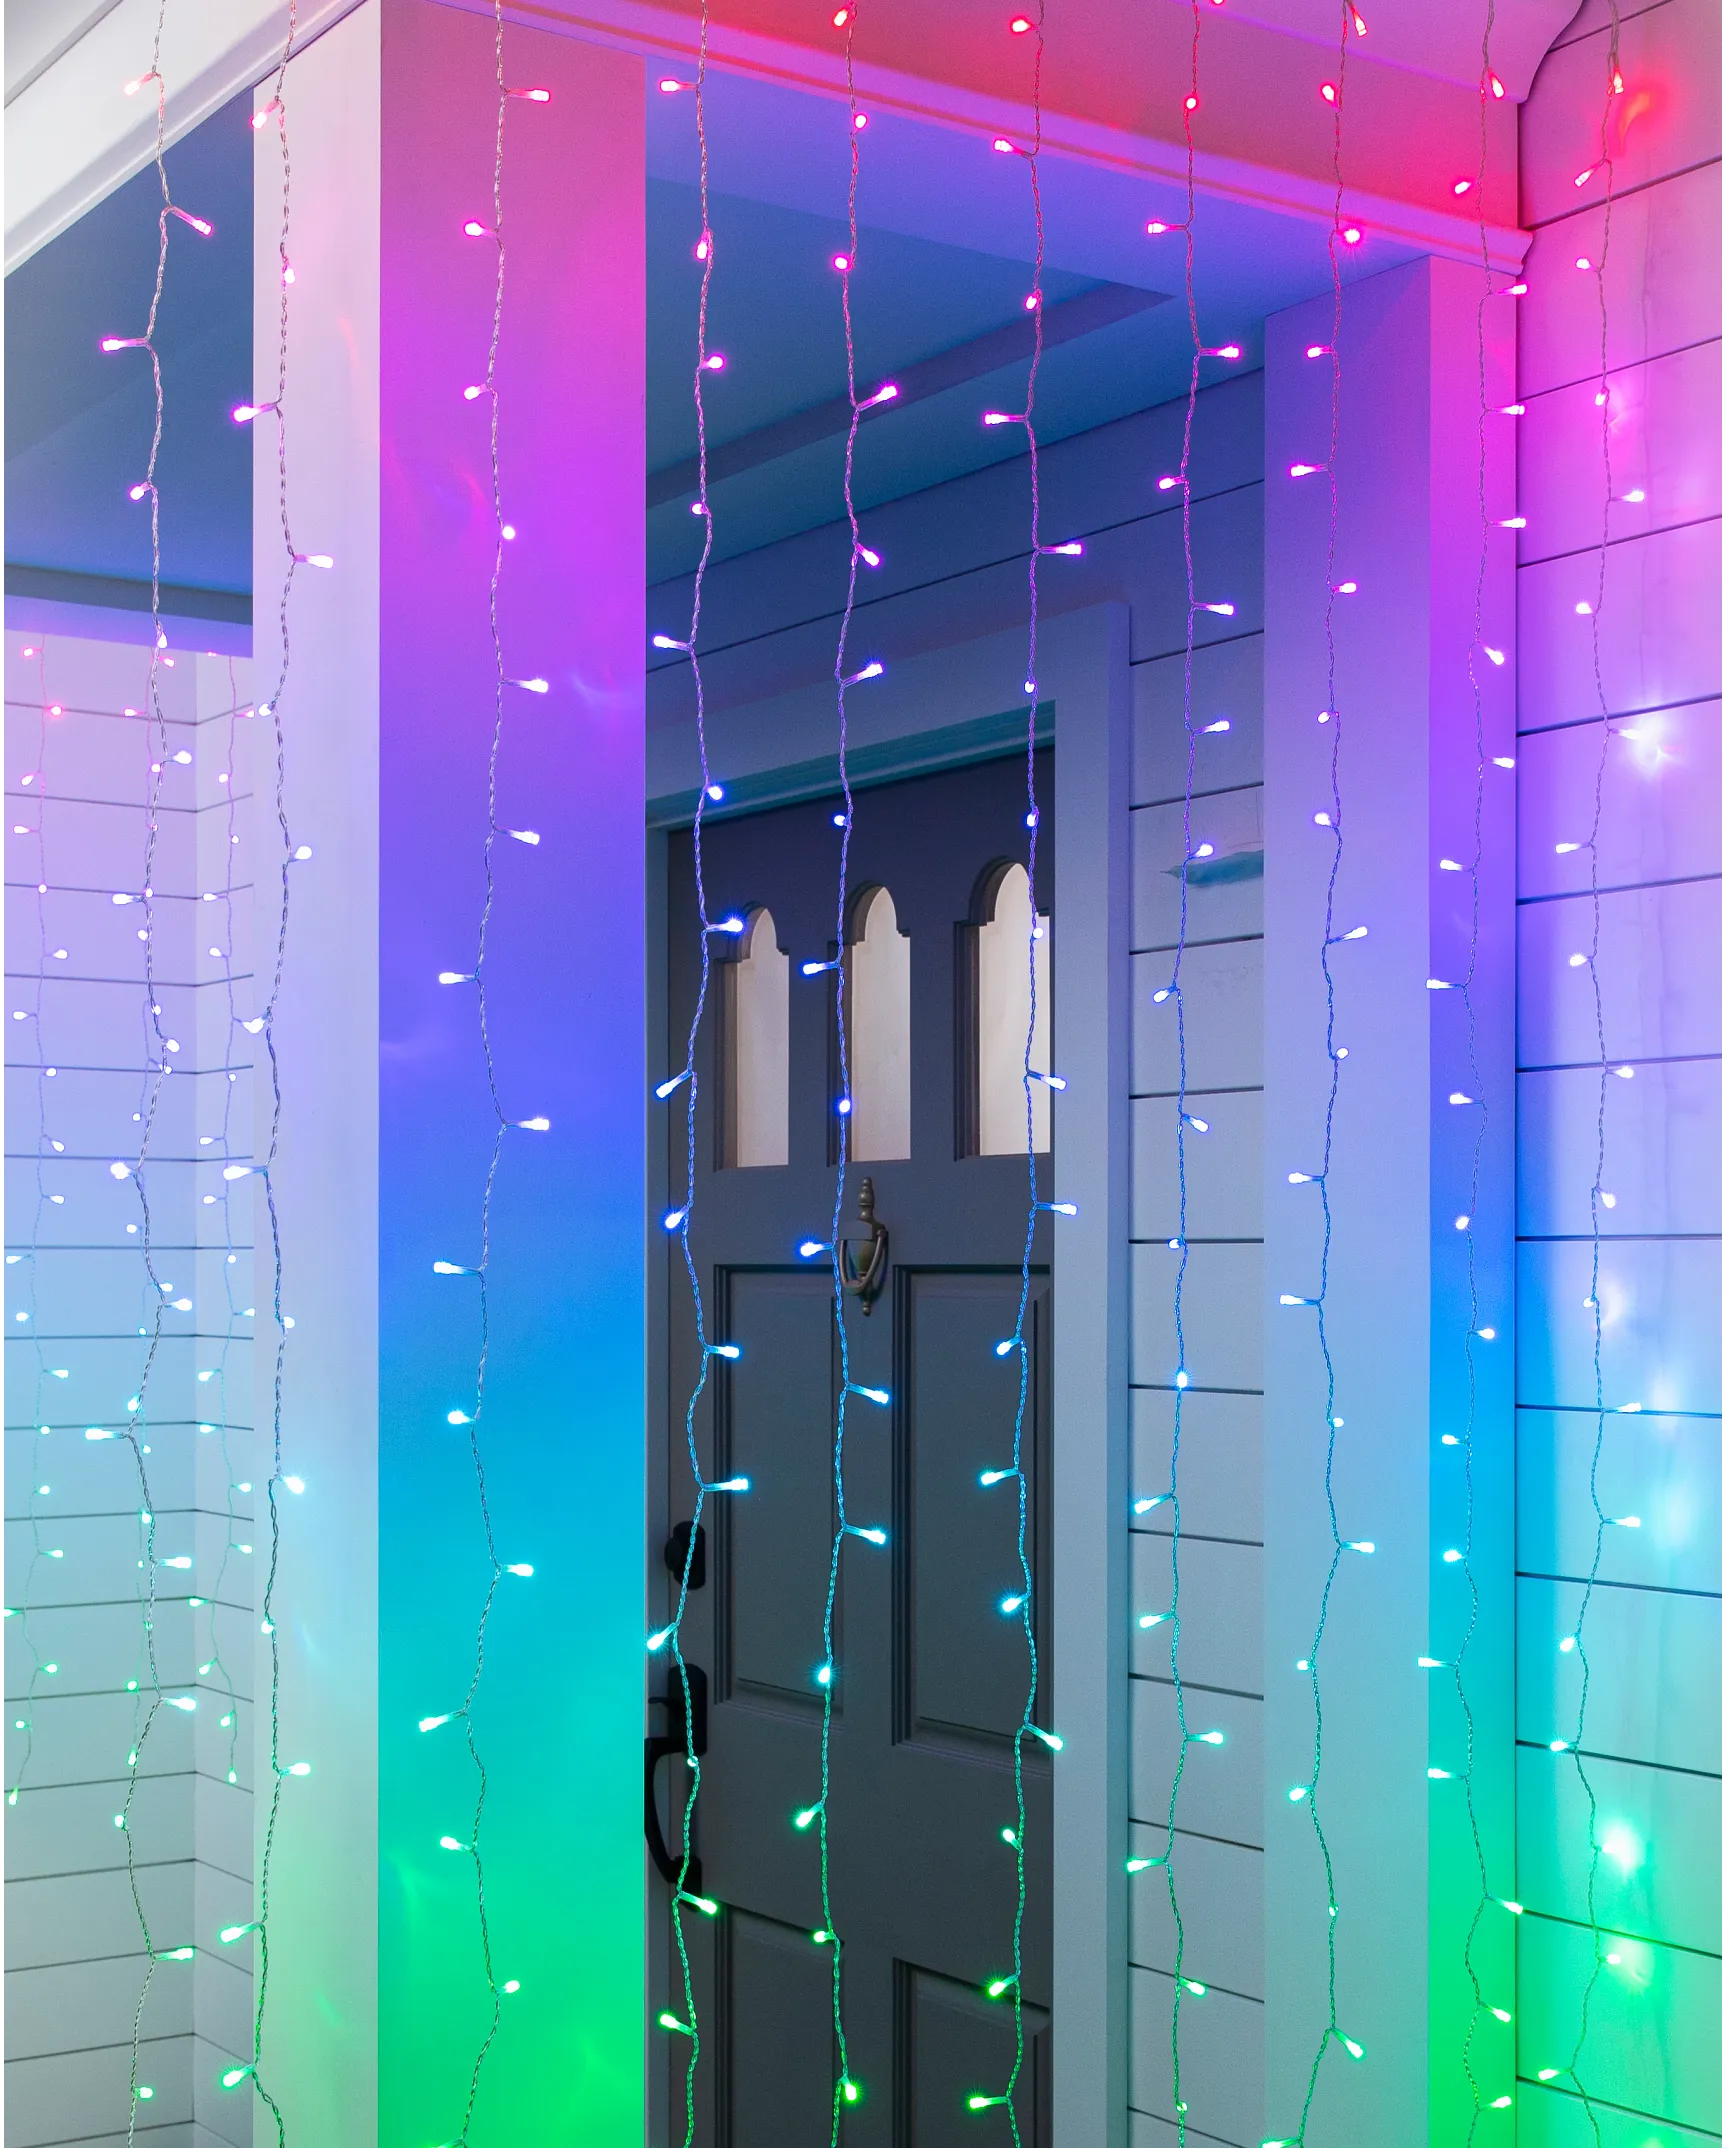 Twinkly LED light curtain, RGB+W, 210 LEDs • Fairy lights &